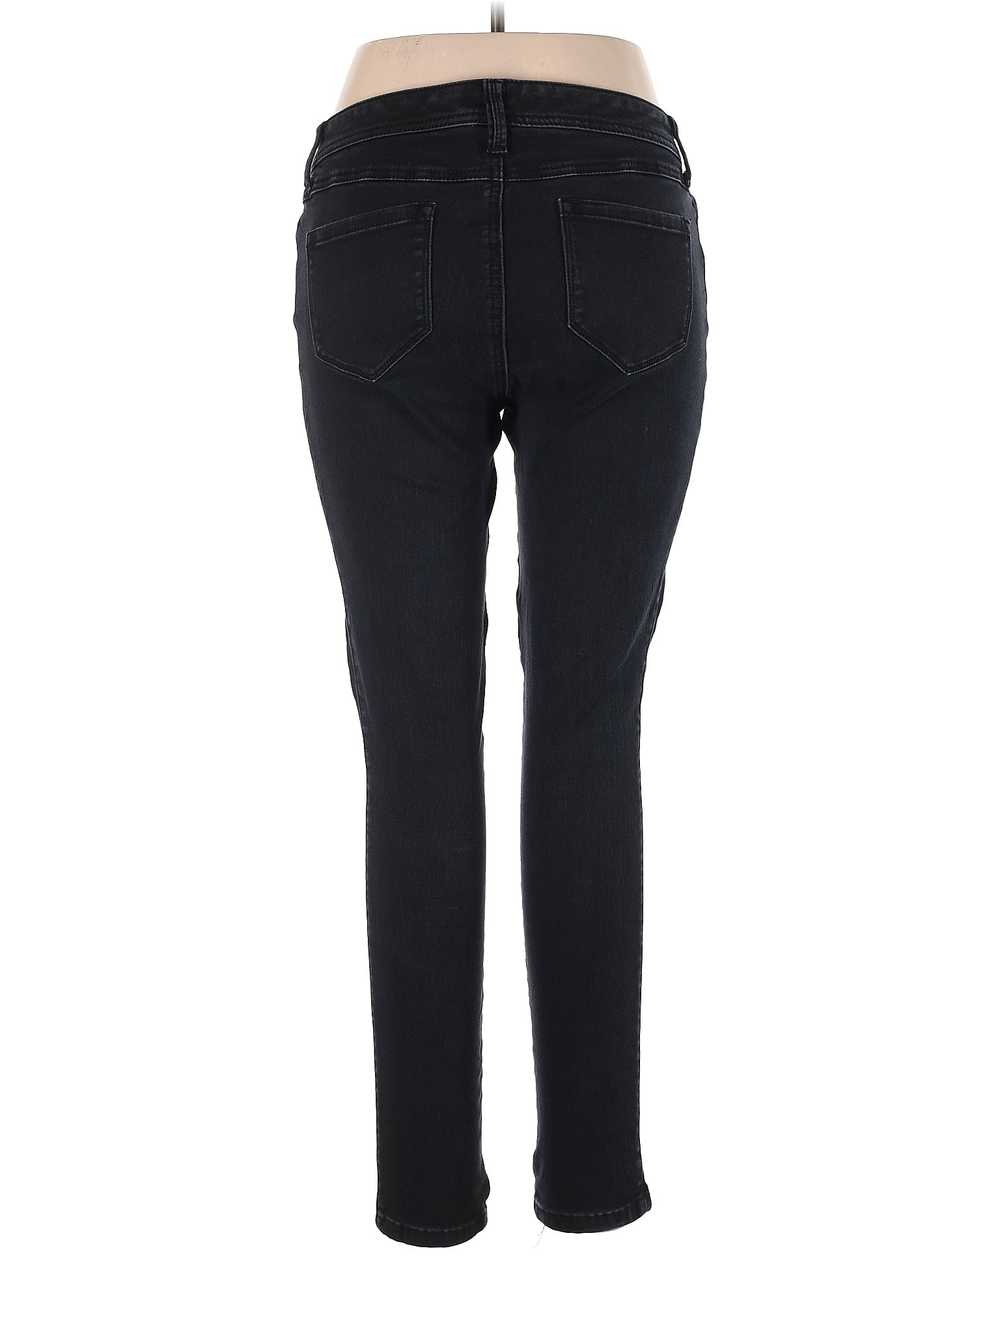 Torrid Women Black Jeans 14 Plus - image 2